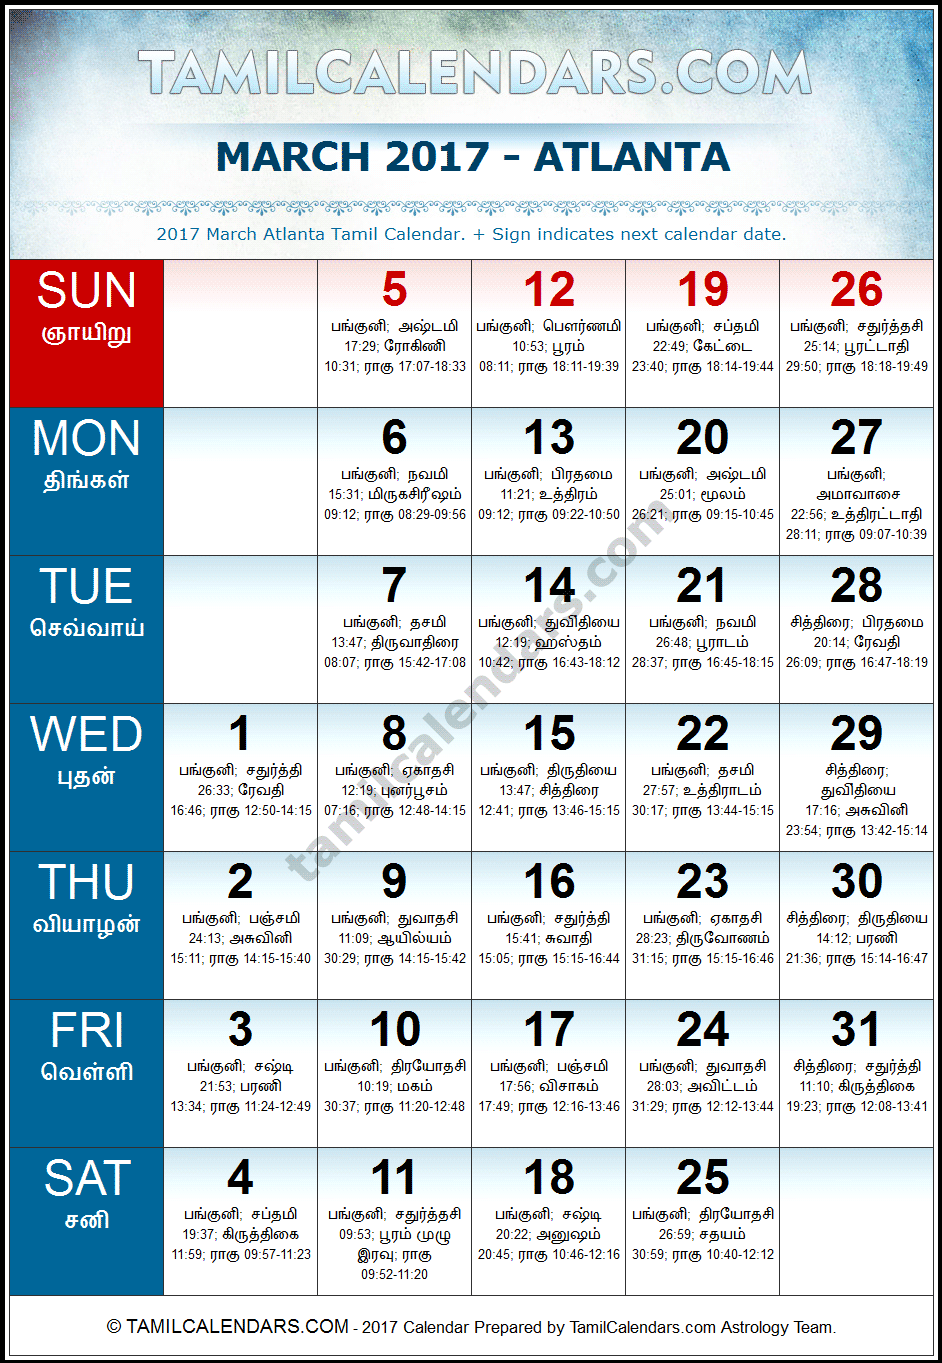 March 2017 Tamil Calendar for Atlanta, USA